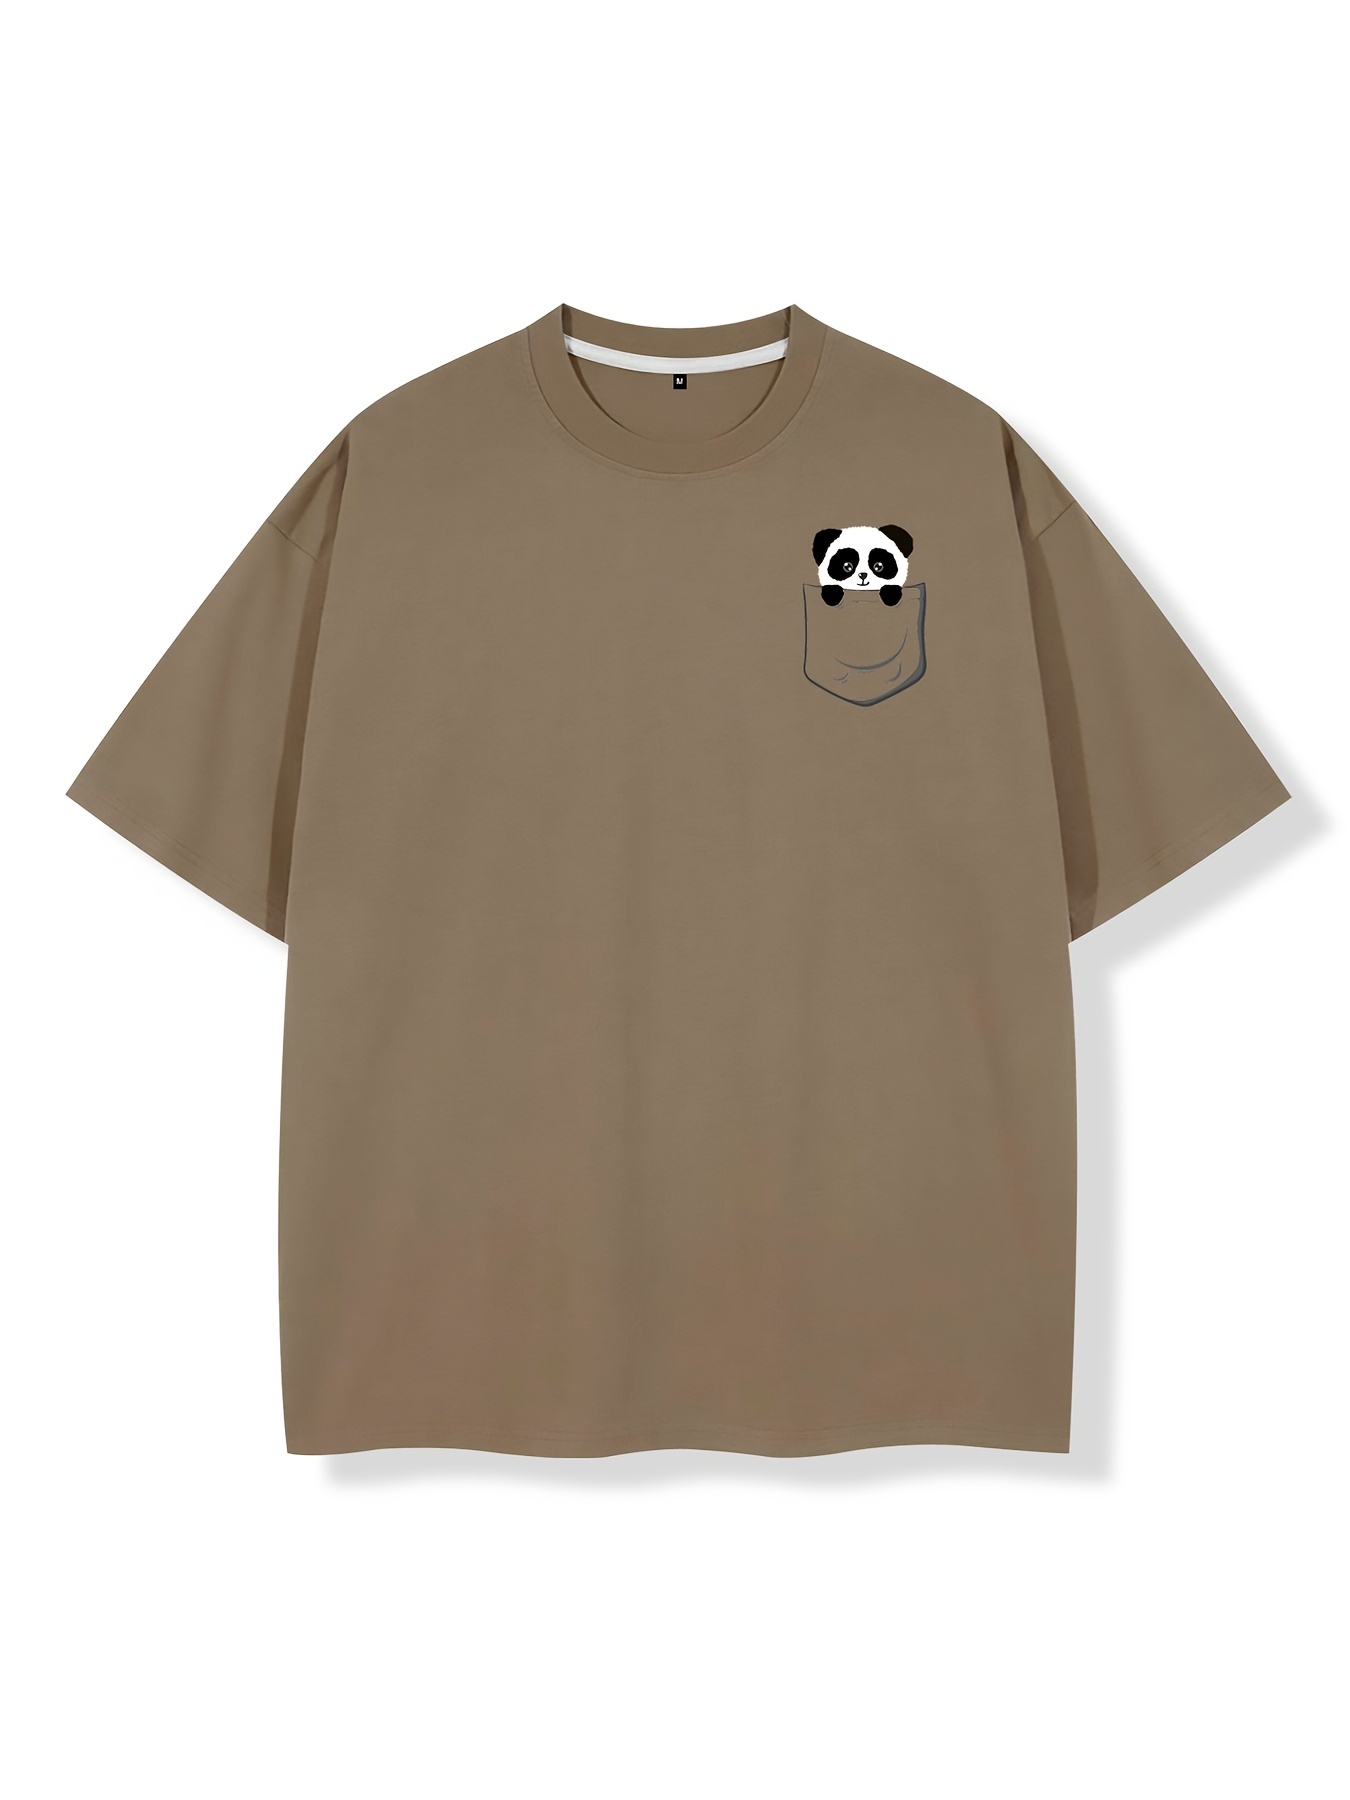 Balenciaga panda T-shirt - Brown  Shirts, Panda tshirt, Print t shirt